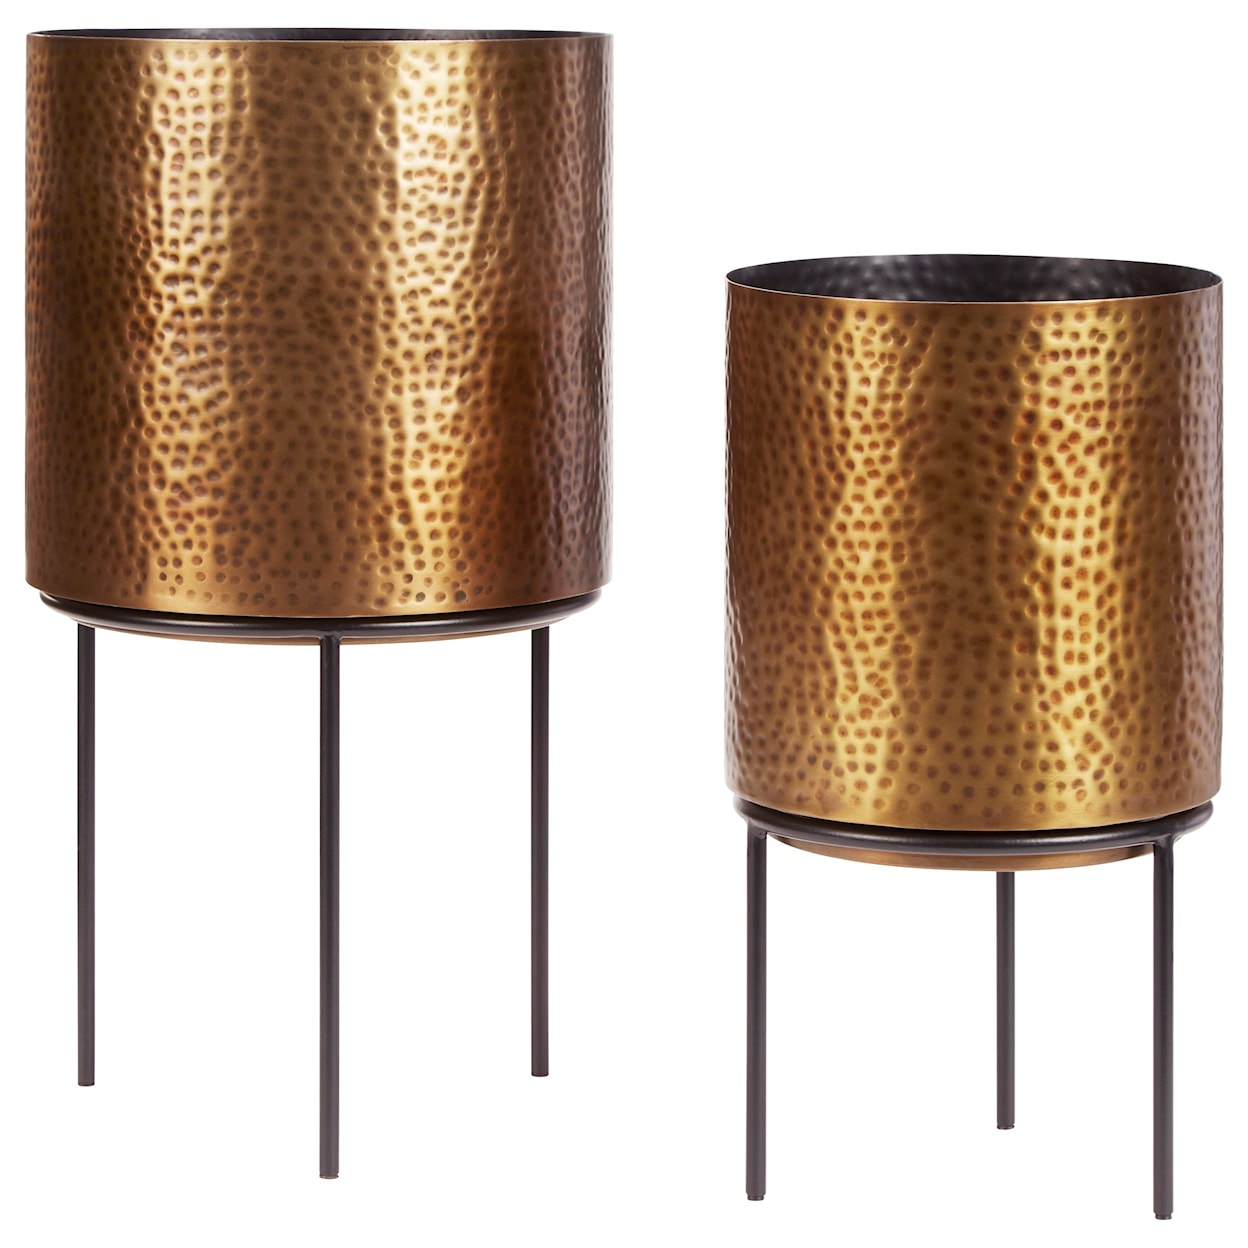 Ashley Furniture Signature Design Accents Donisha Antique Brass Finish Planter Set